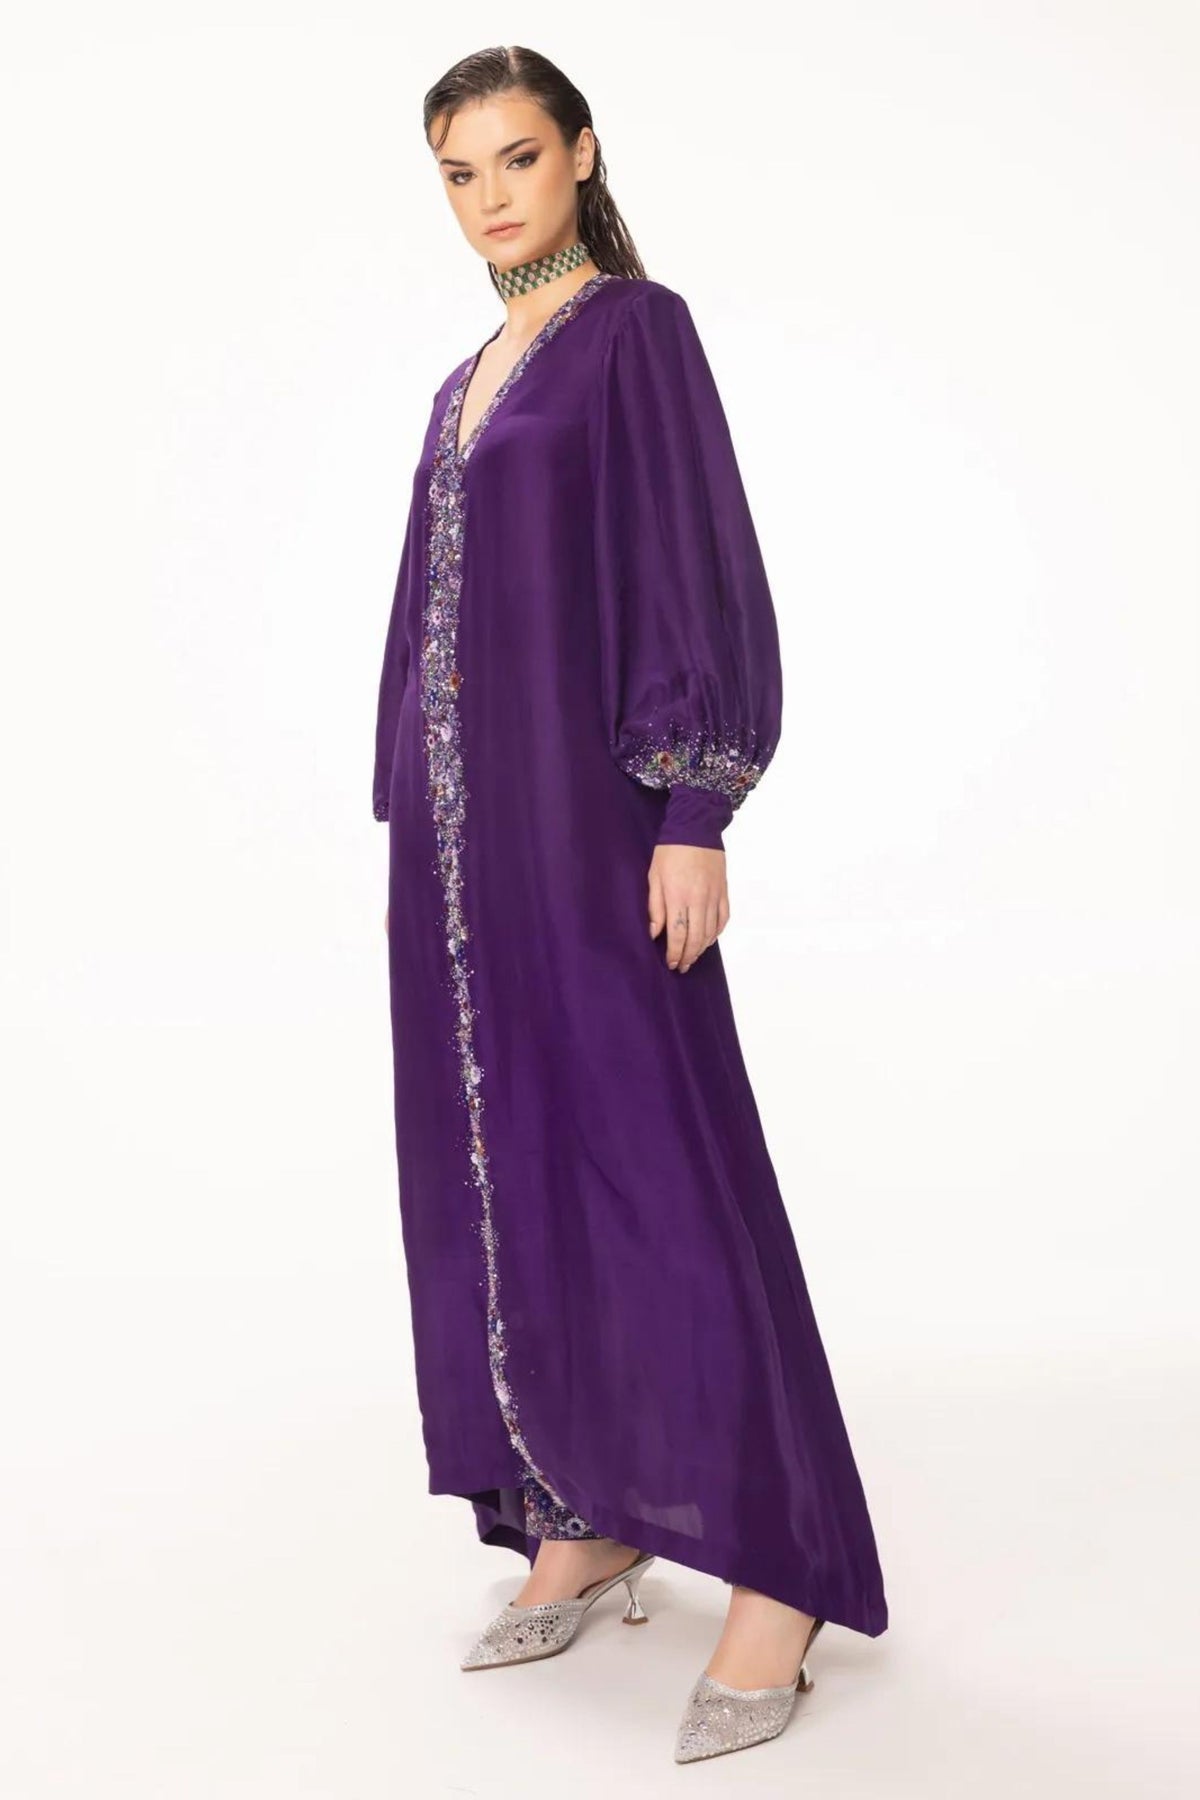 Purple Long Bell Sleeves Dress